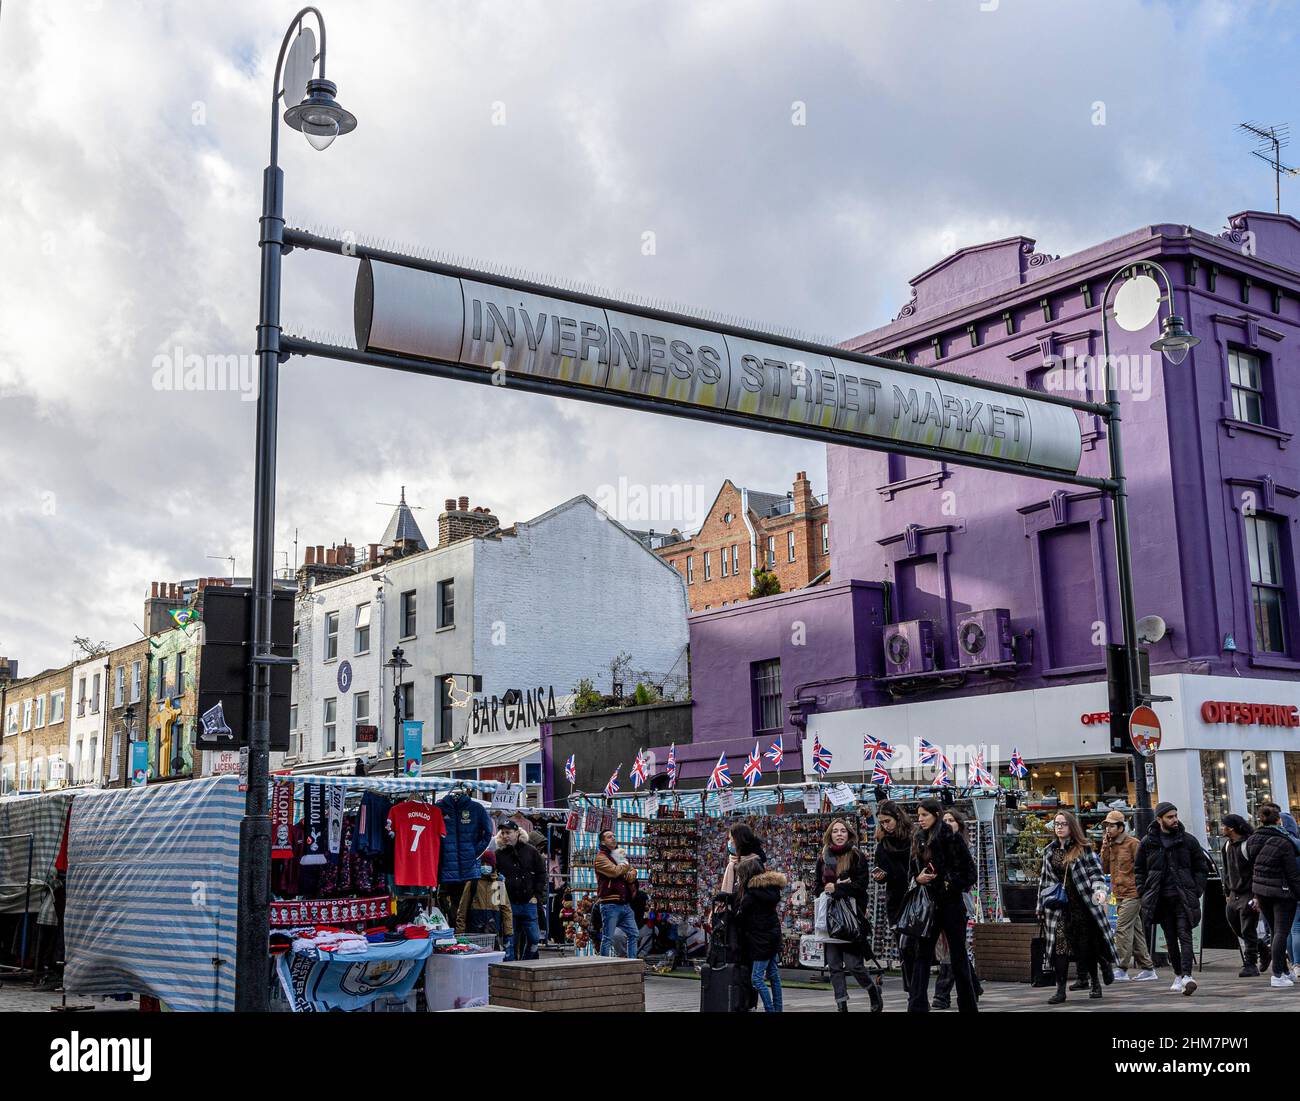 Inverness Street Market, Camden Town, Londres, Inglaterra, Reino Unido. Foto de stock